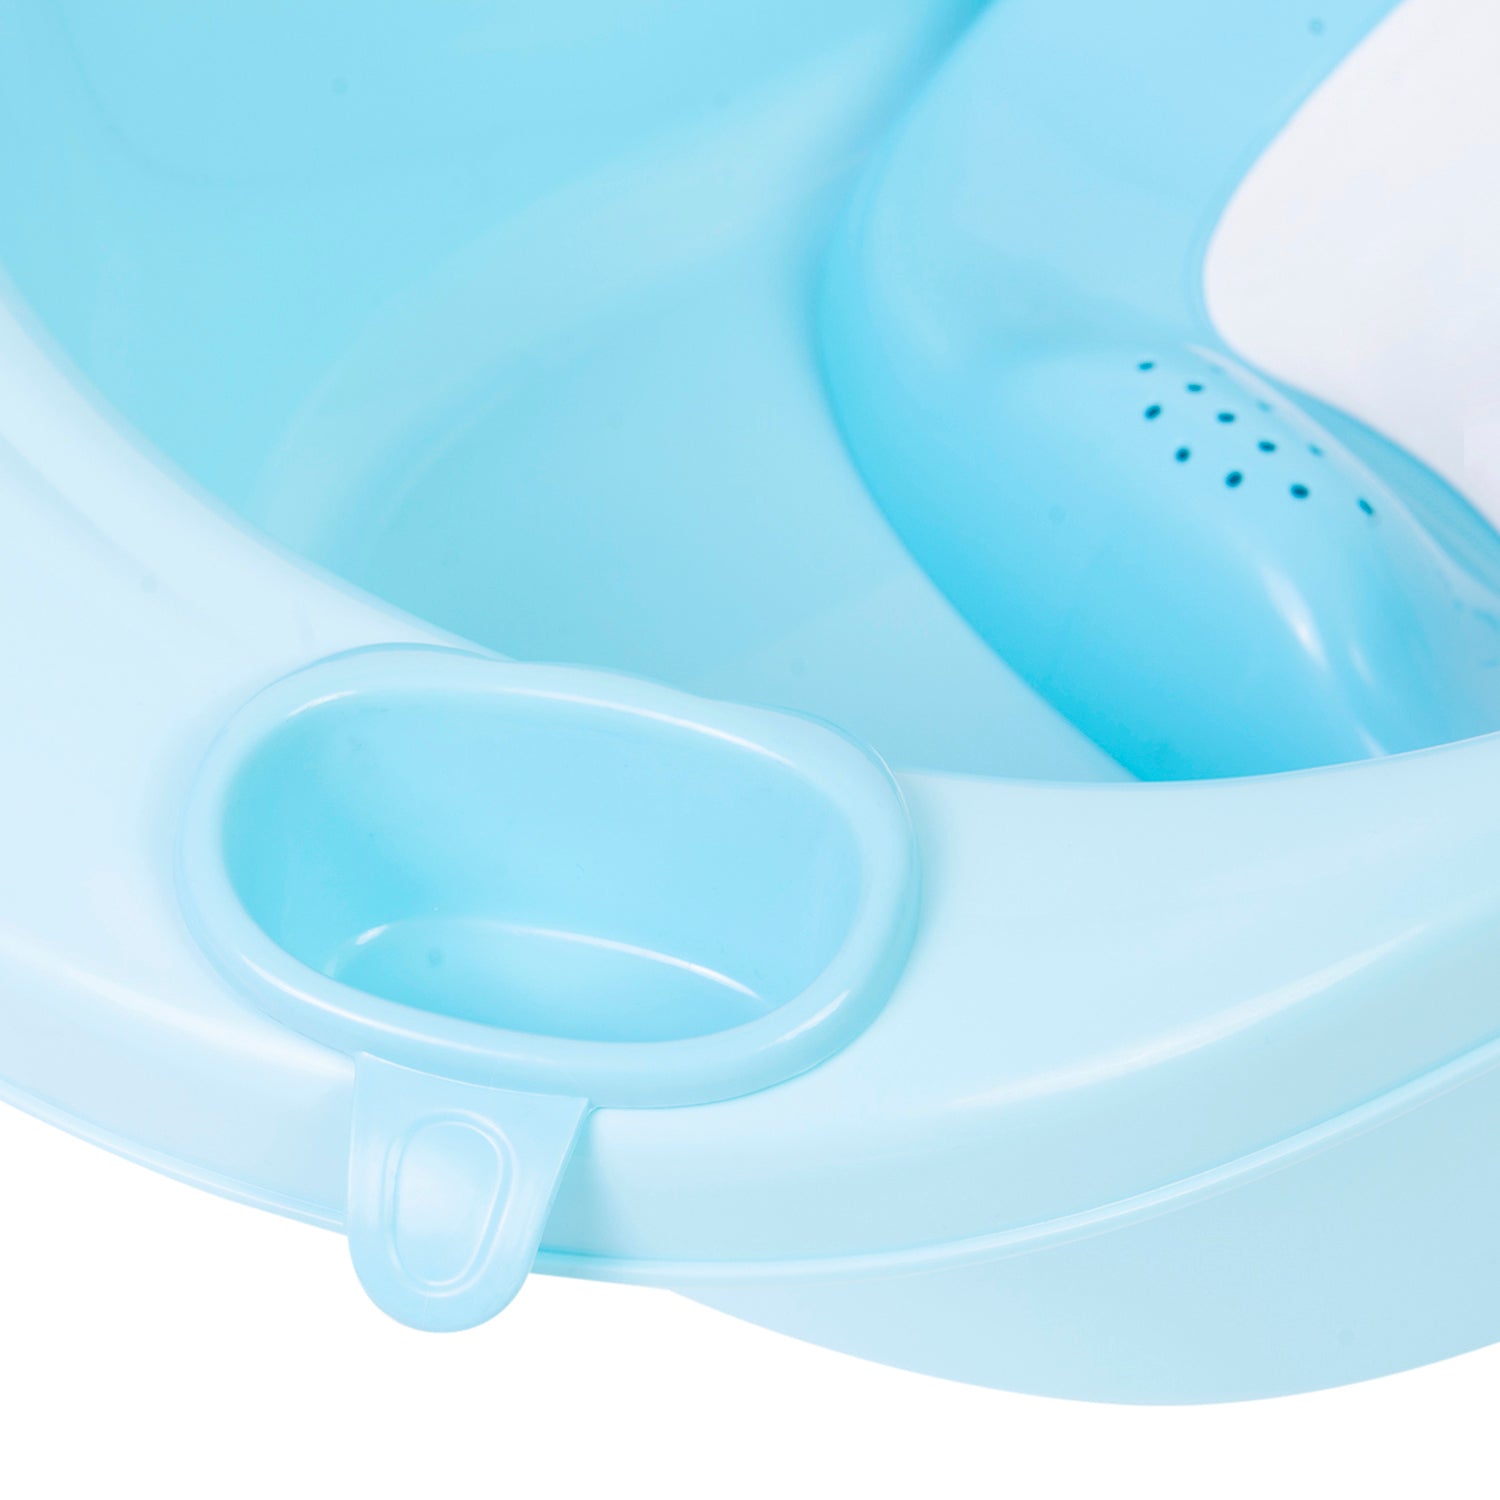 Baby Moo Bath Tub With Bather And Drain Plug Blue